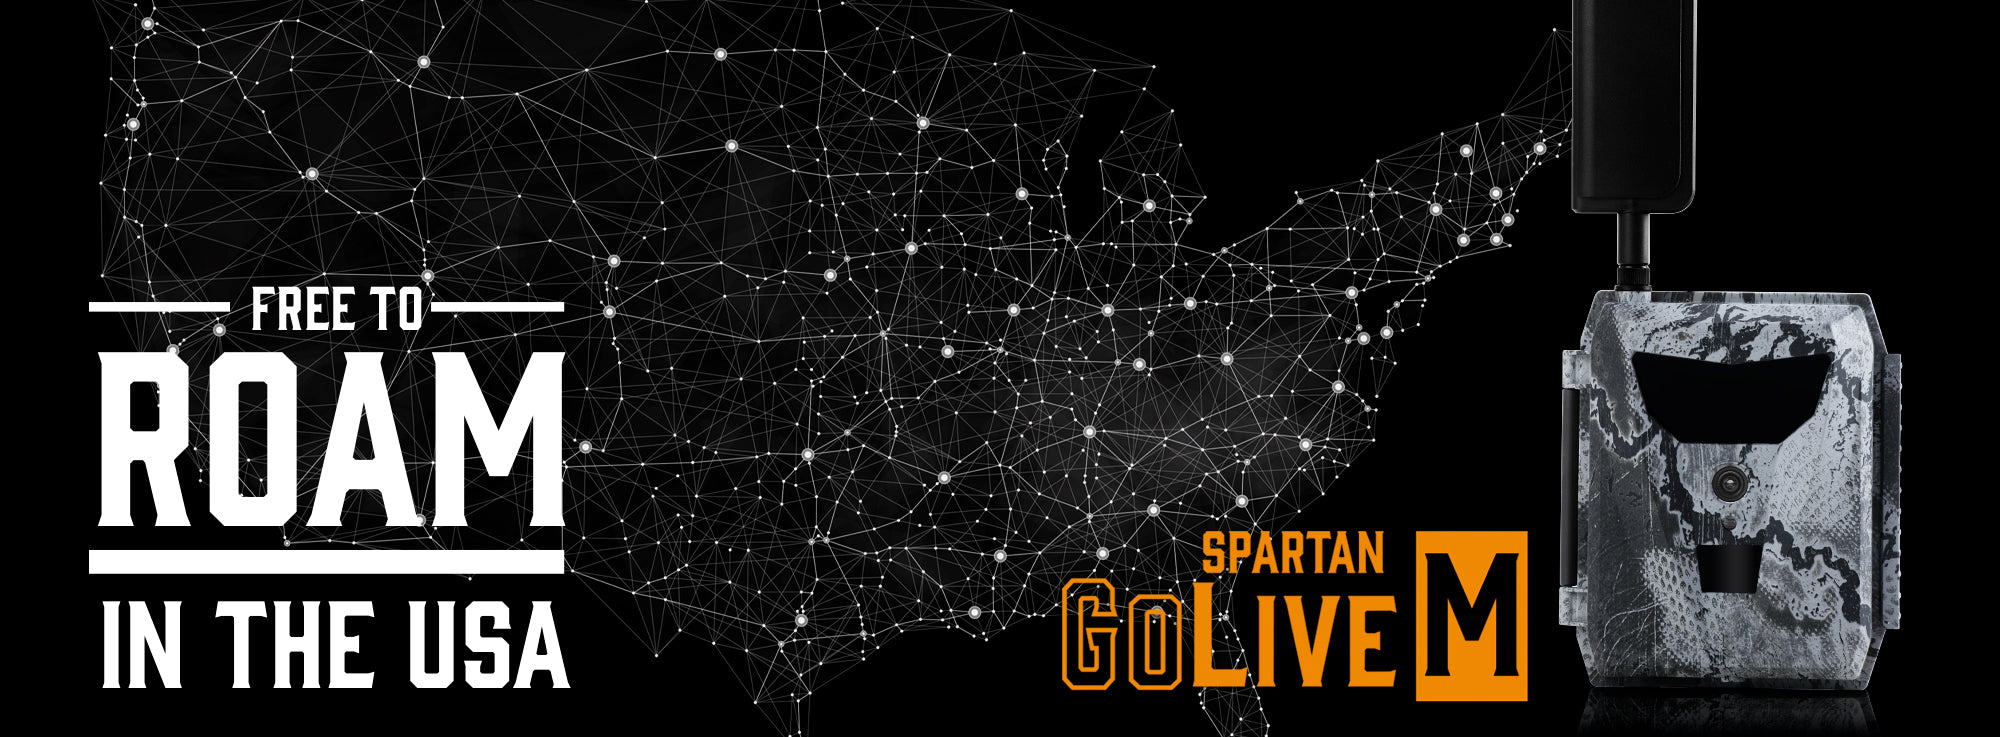 The Spartan Web